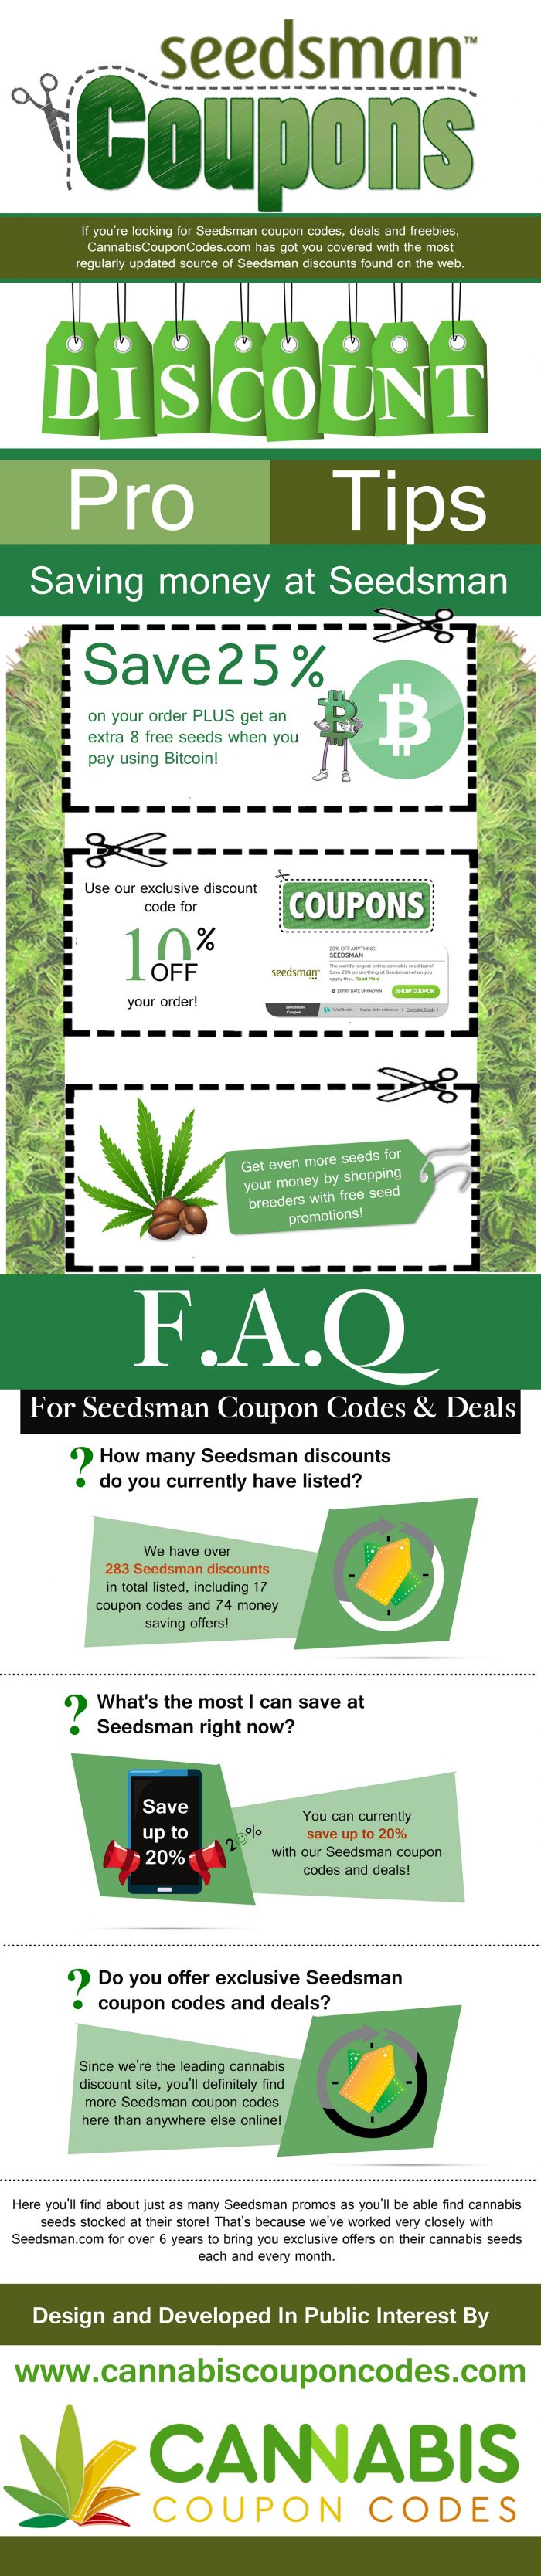 Seedsman Discount Codes & Deals